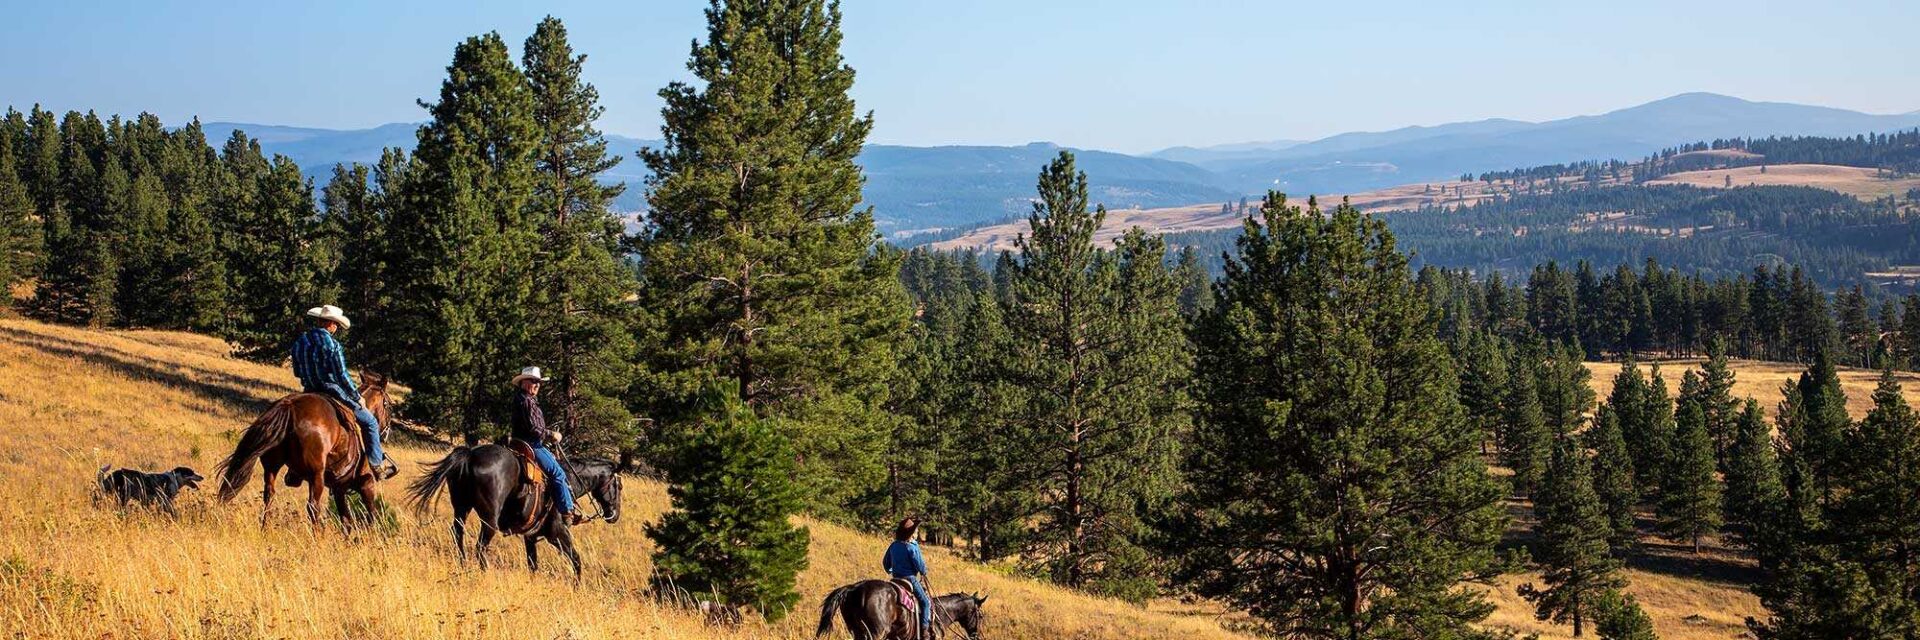 Horseback riding China Ridge